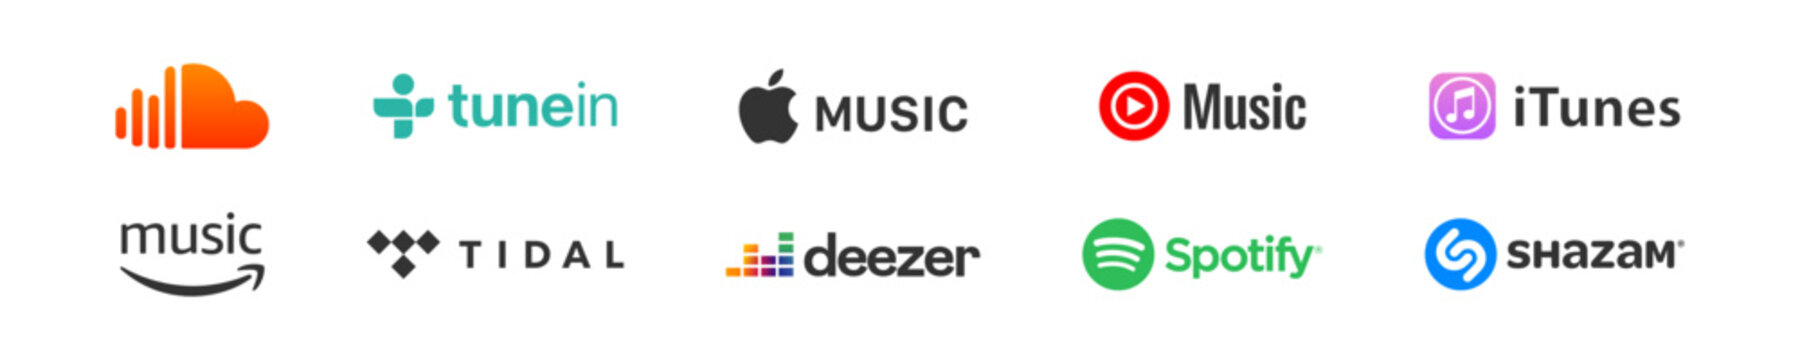 Top stream music servise company logo set. Amazon music, tunein, tidal, apple music, deezer, youtube music, spotify, itunes, shazam. Editorial logotype in vector flat style.